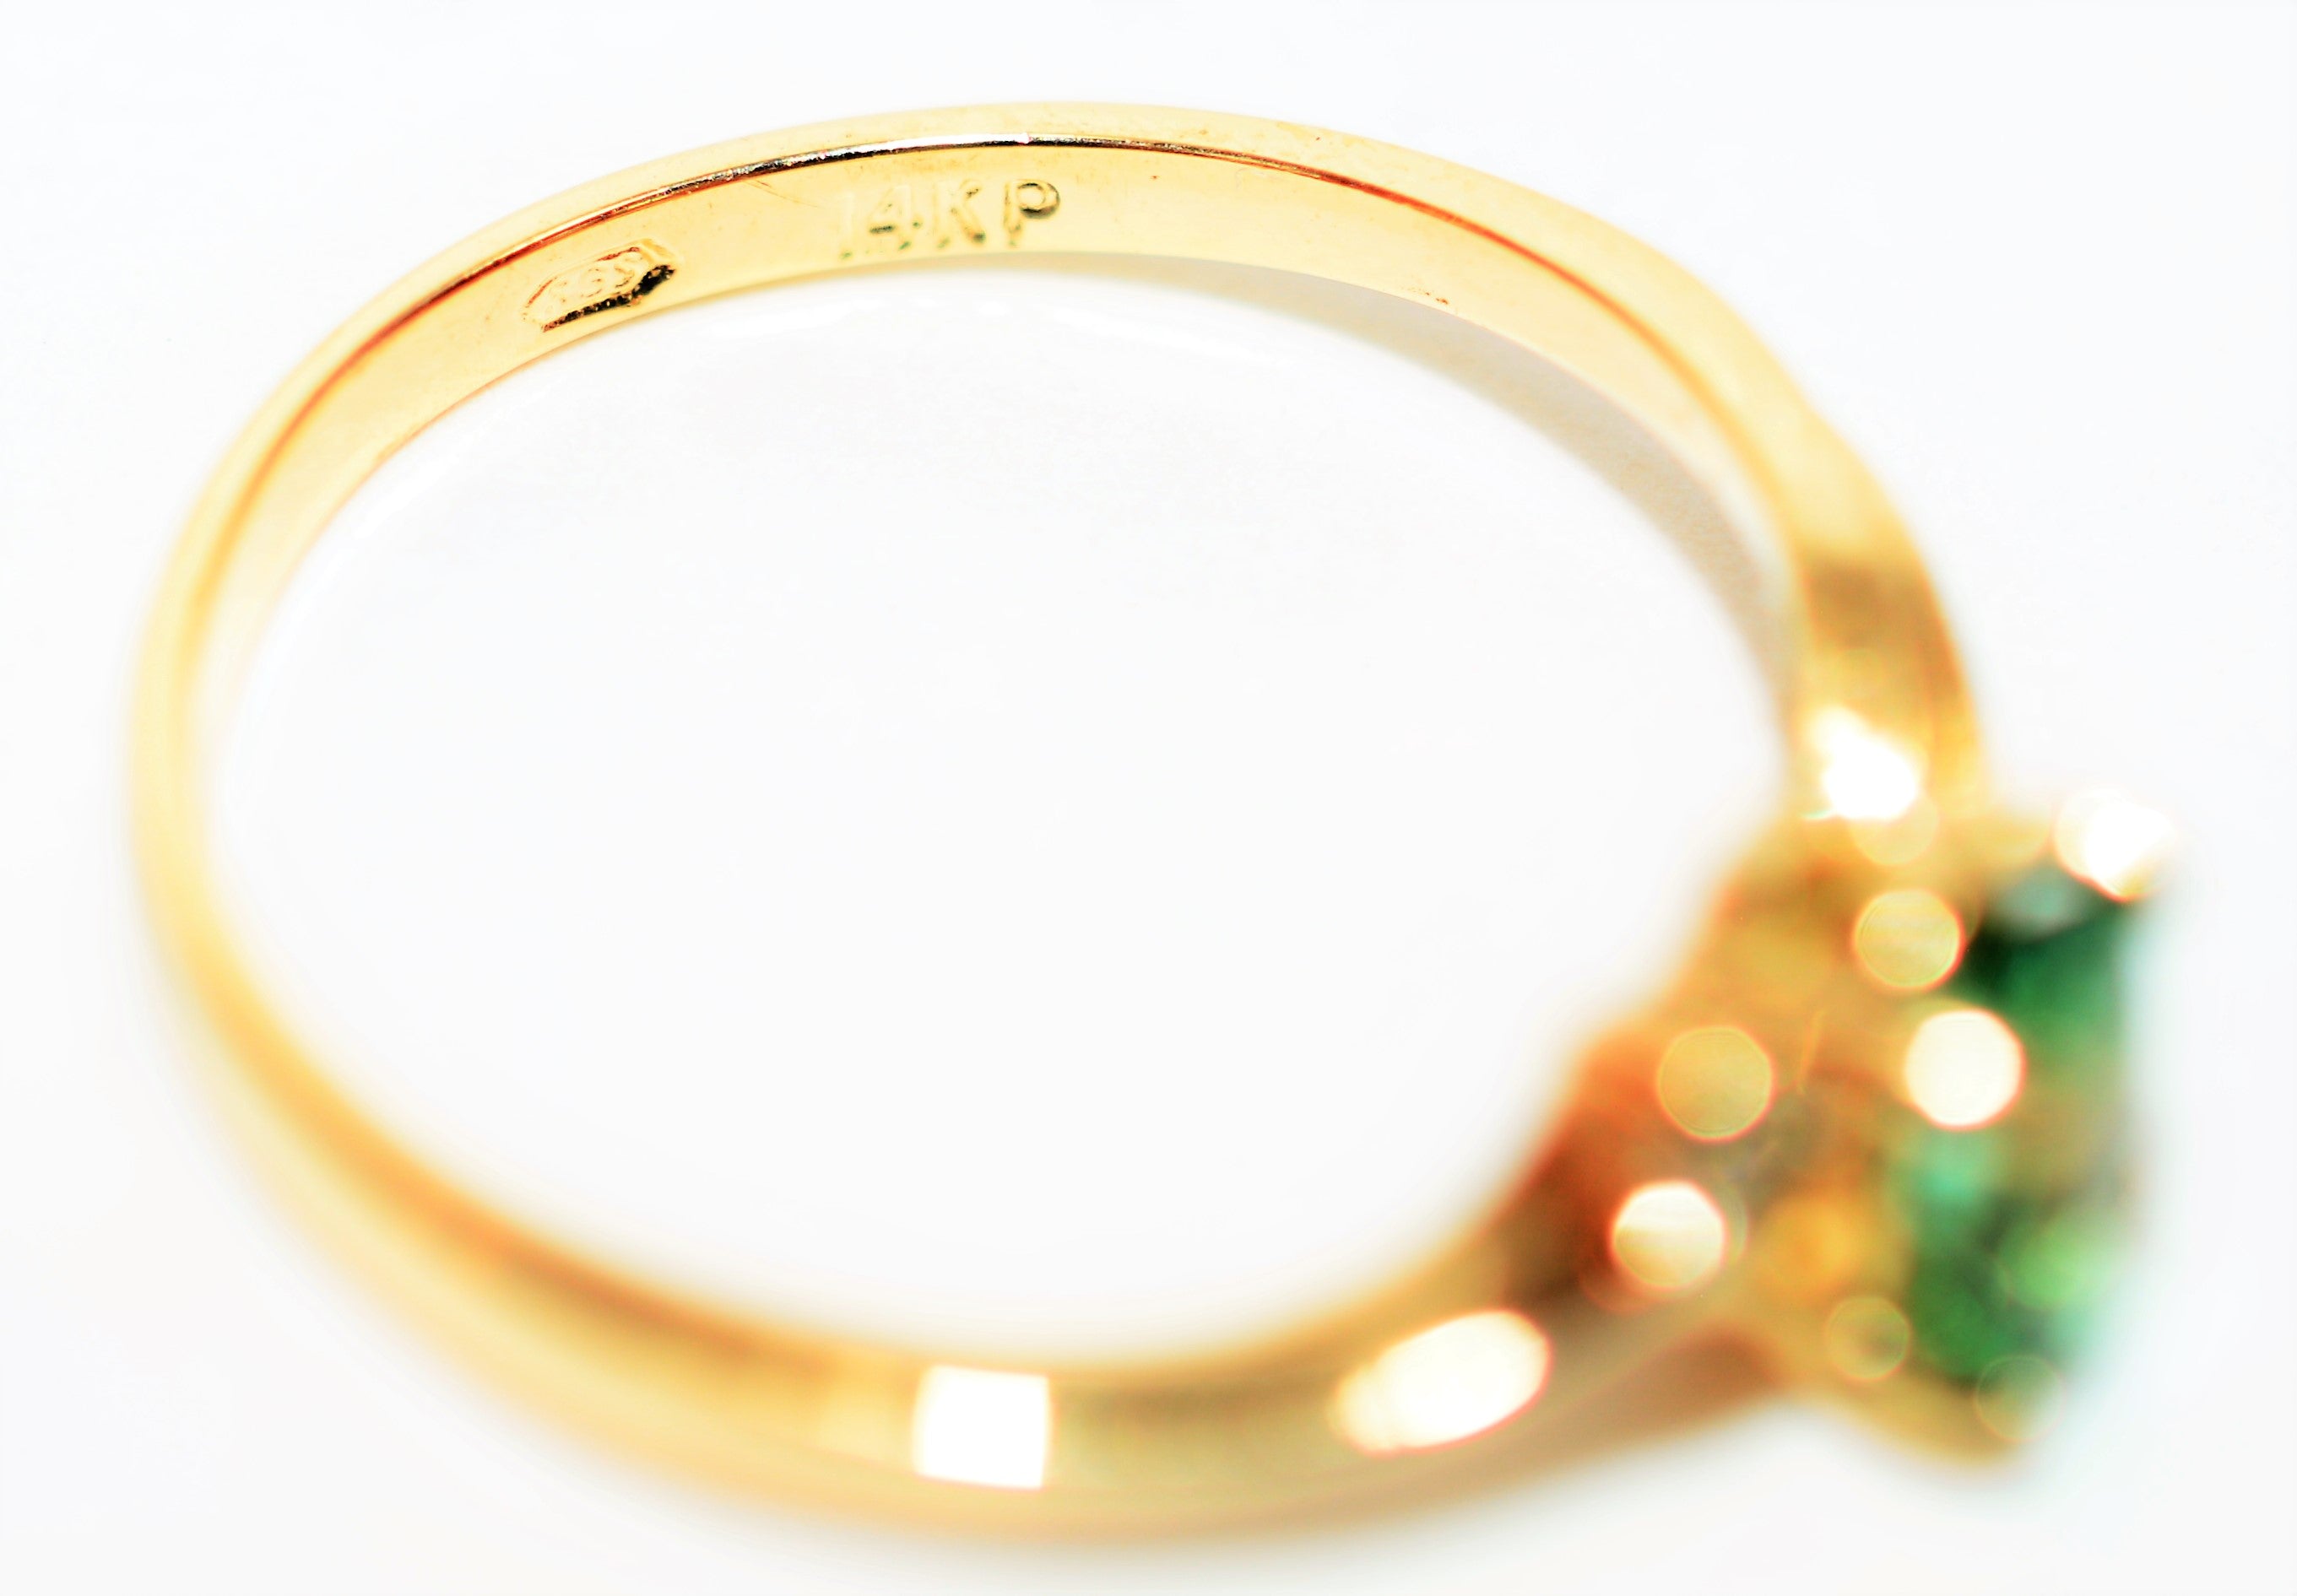 Natural Paraiba Tourmaline & Diamond Ring 14K Solid Gold .56tcw Gemstone Ring Fine Jewelry Women's Ring Estate Jewellery Birthstone